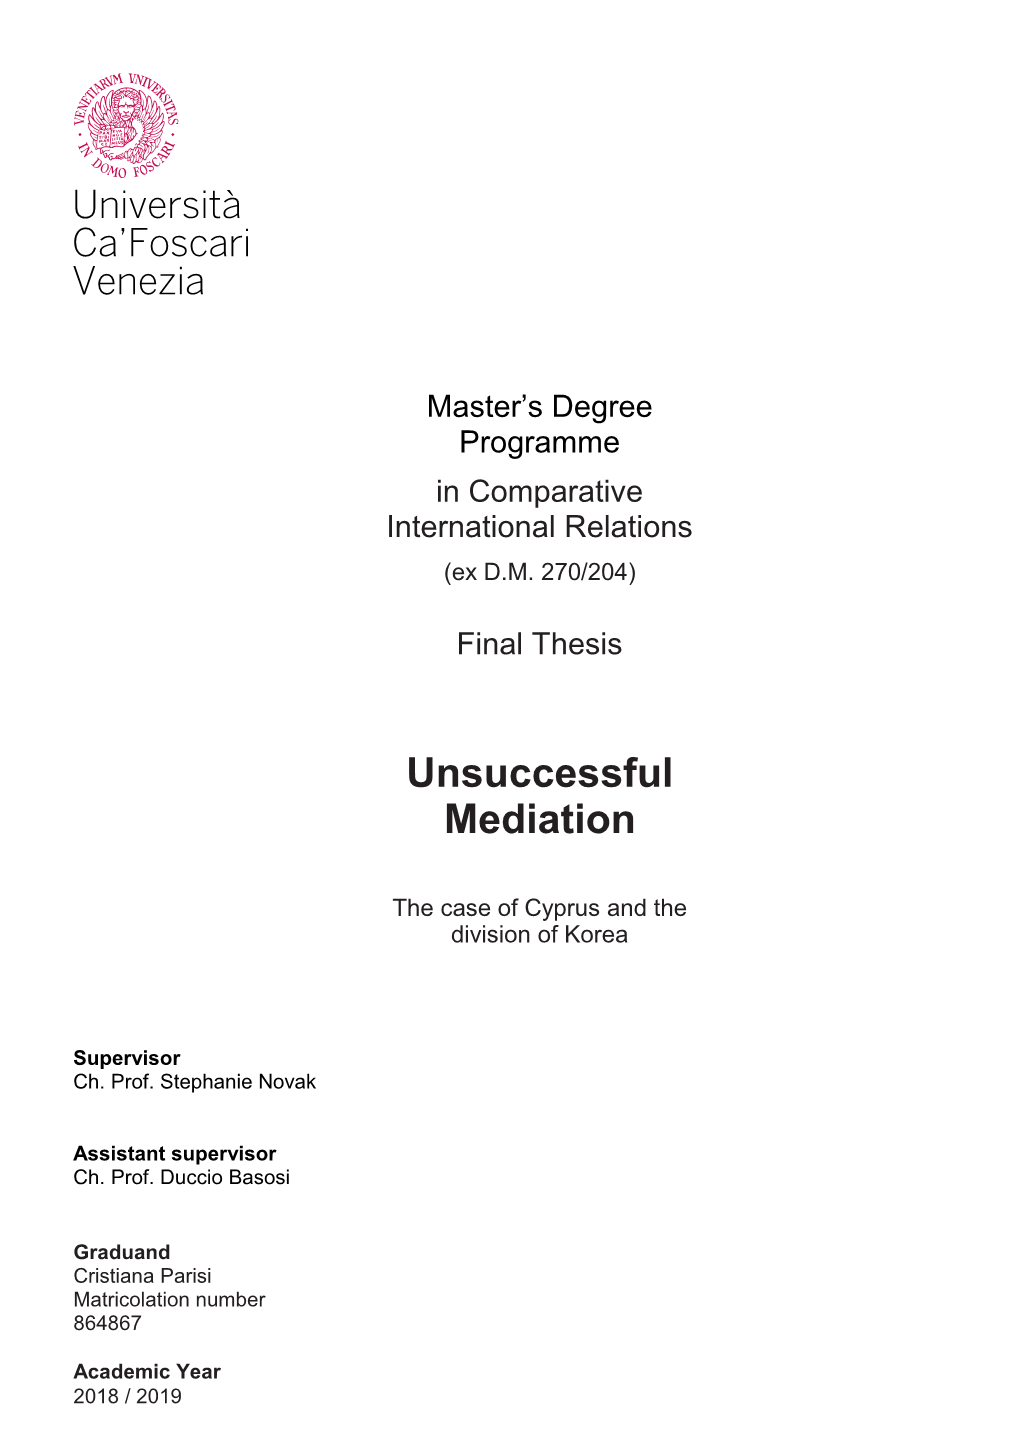 Unsuccessful Mediation